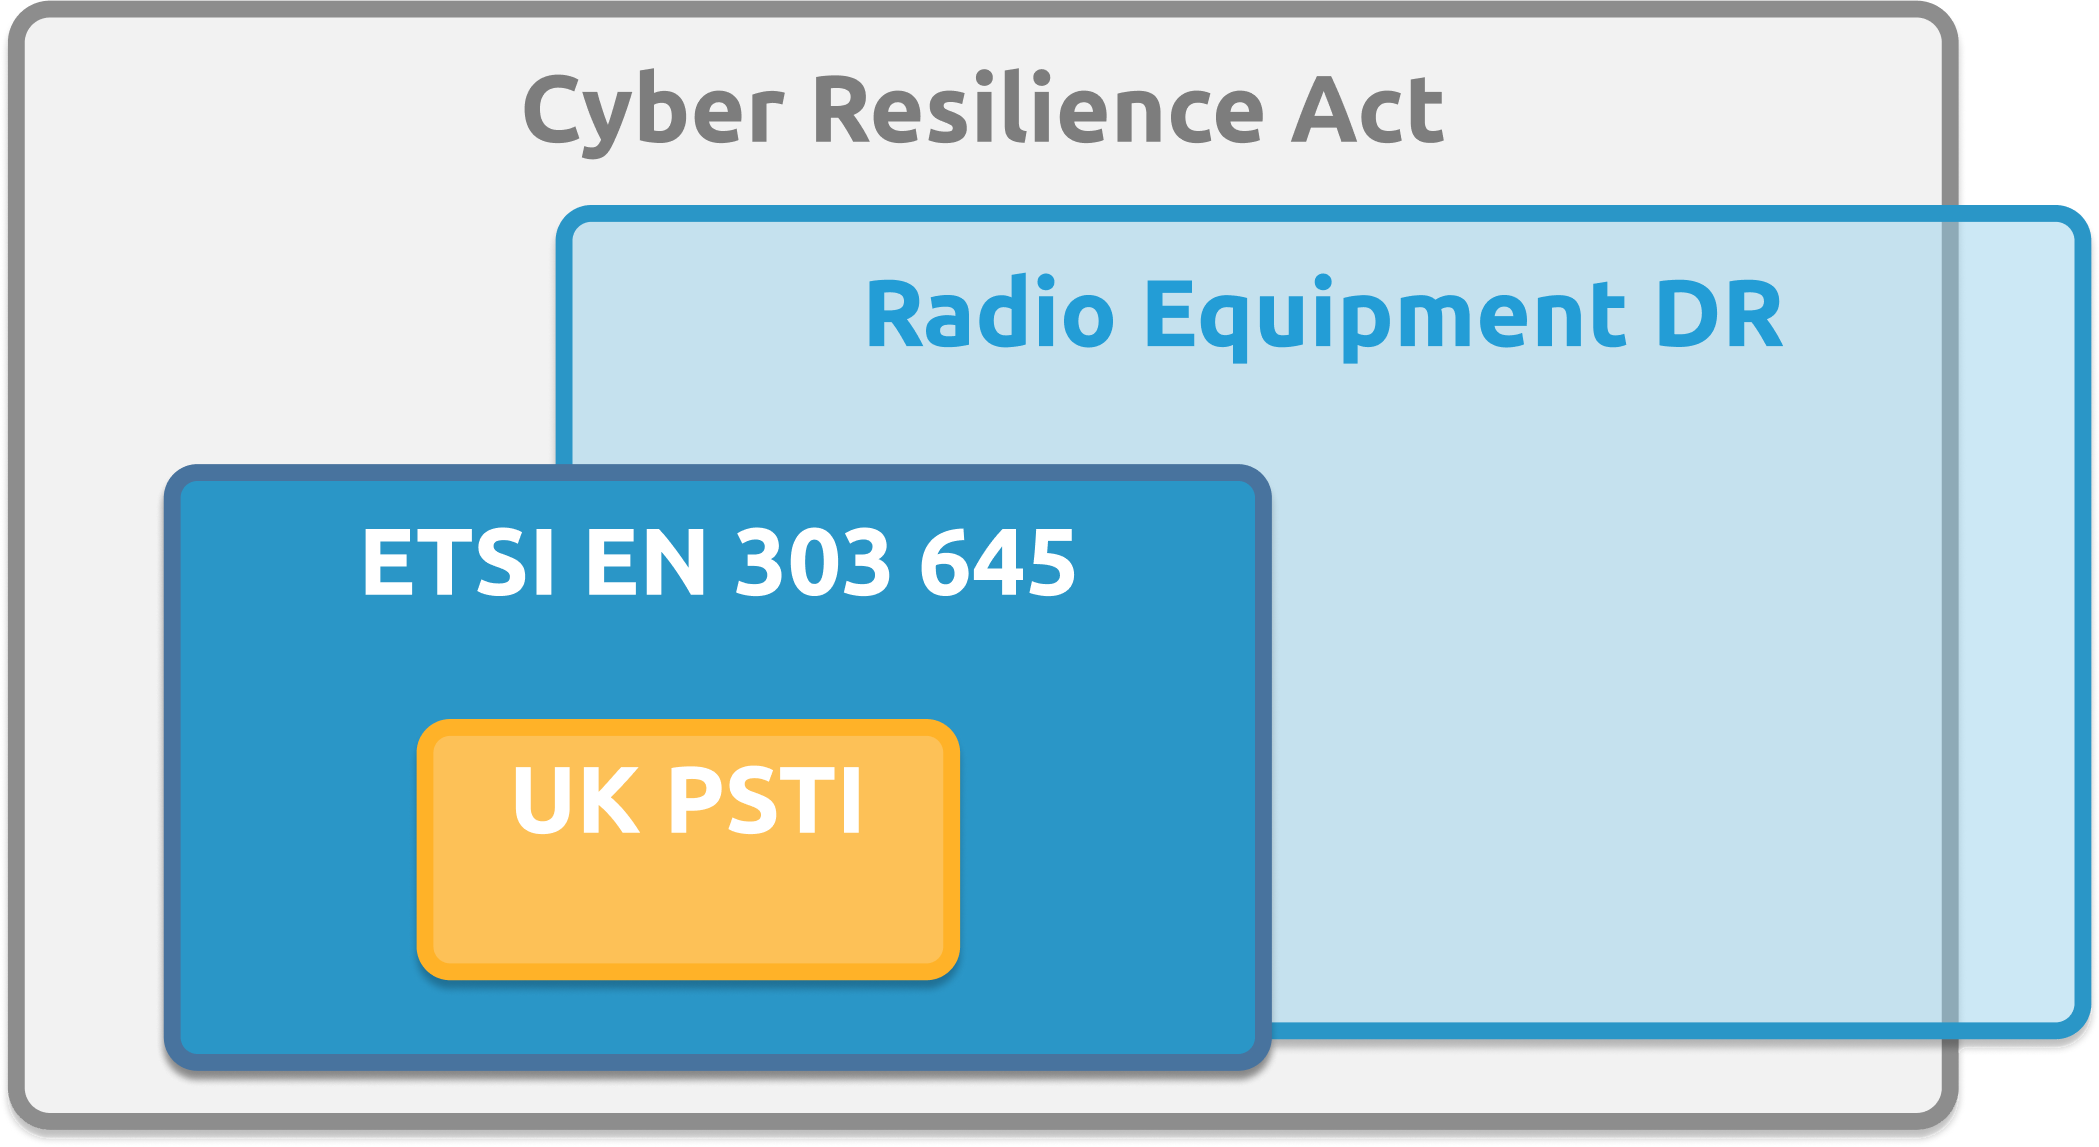 ETSI EN 303 645 covers Radio Equipment Directive DR and CRA